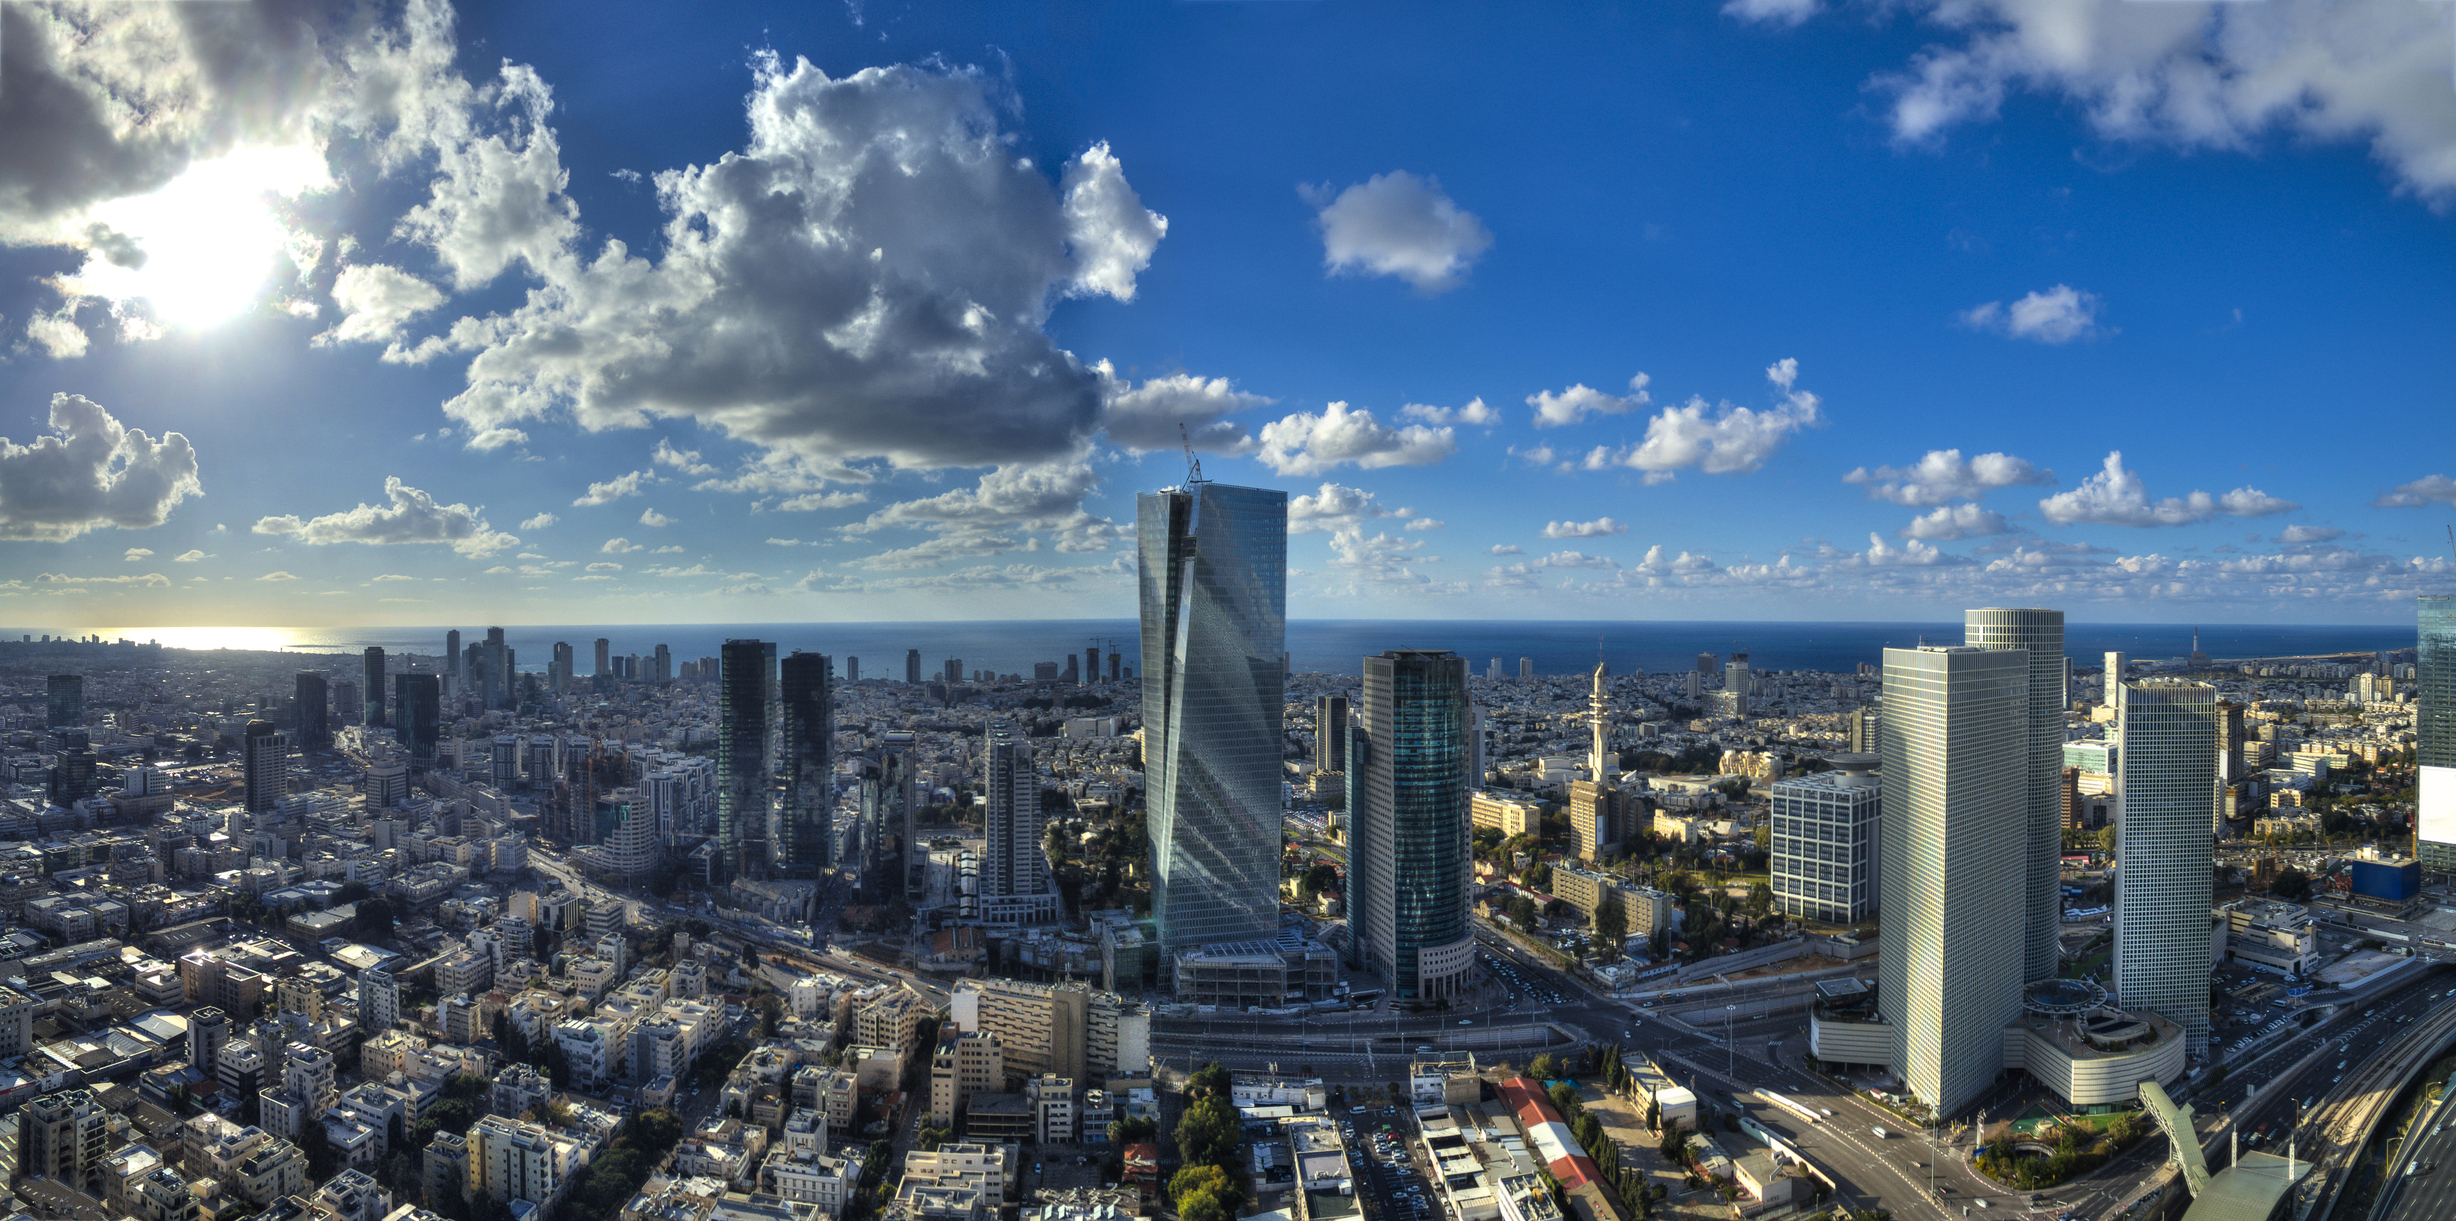 Travel Technology Israel conference set for June in Tel Aviv